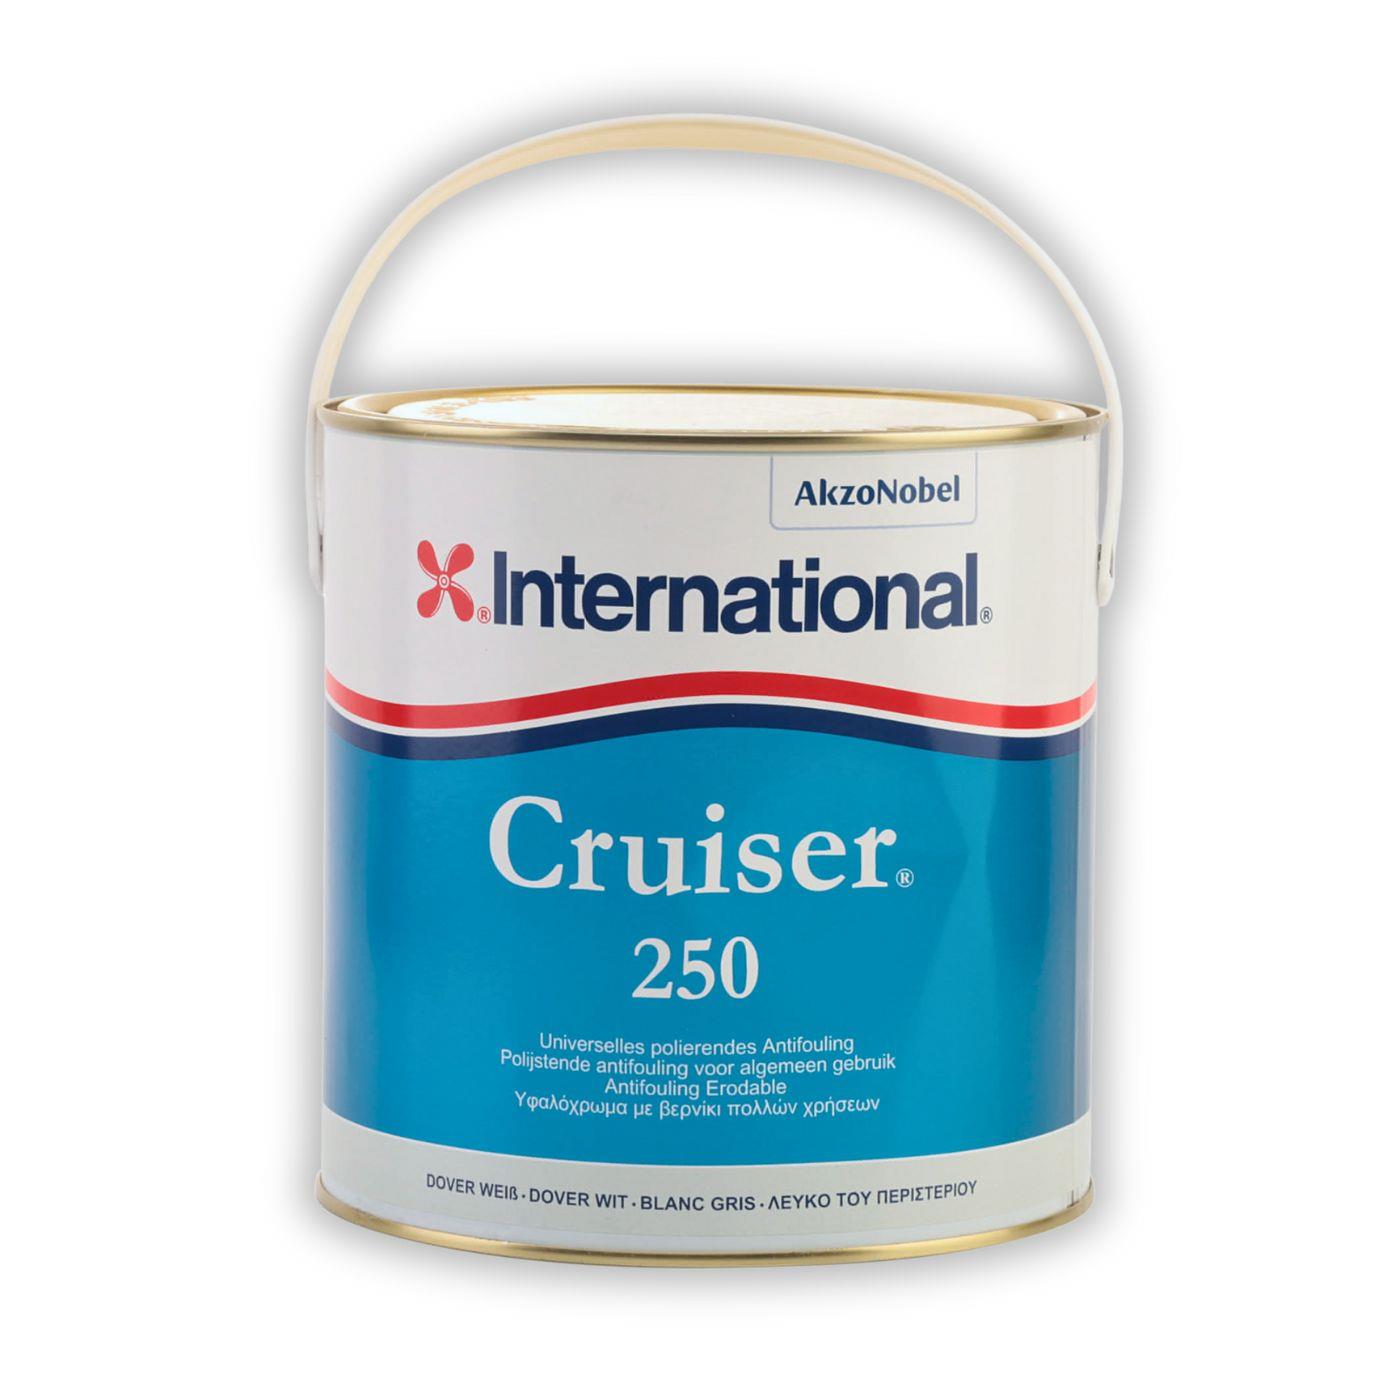 International Cruiser 250 Antifouling dover-white 2,5 Liter